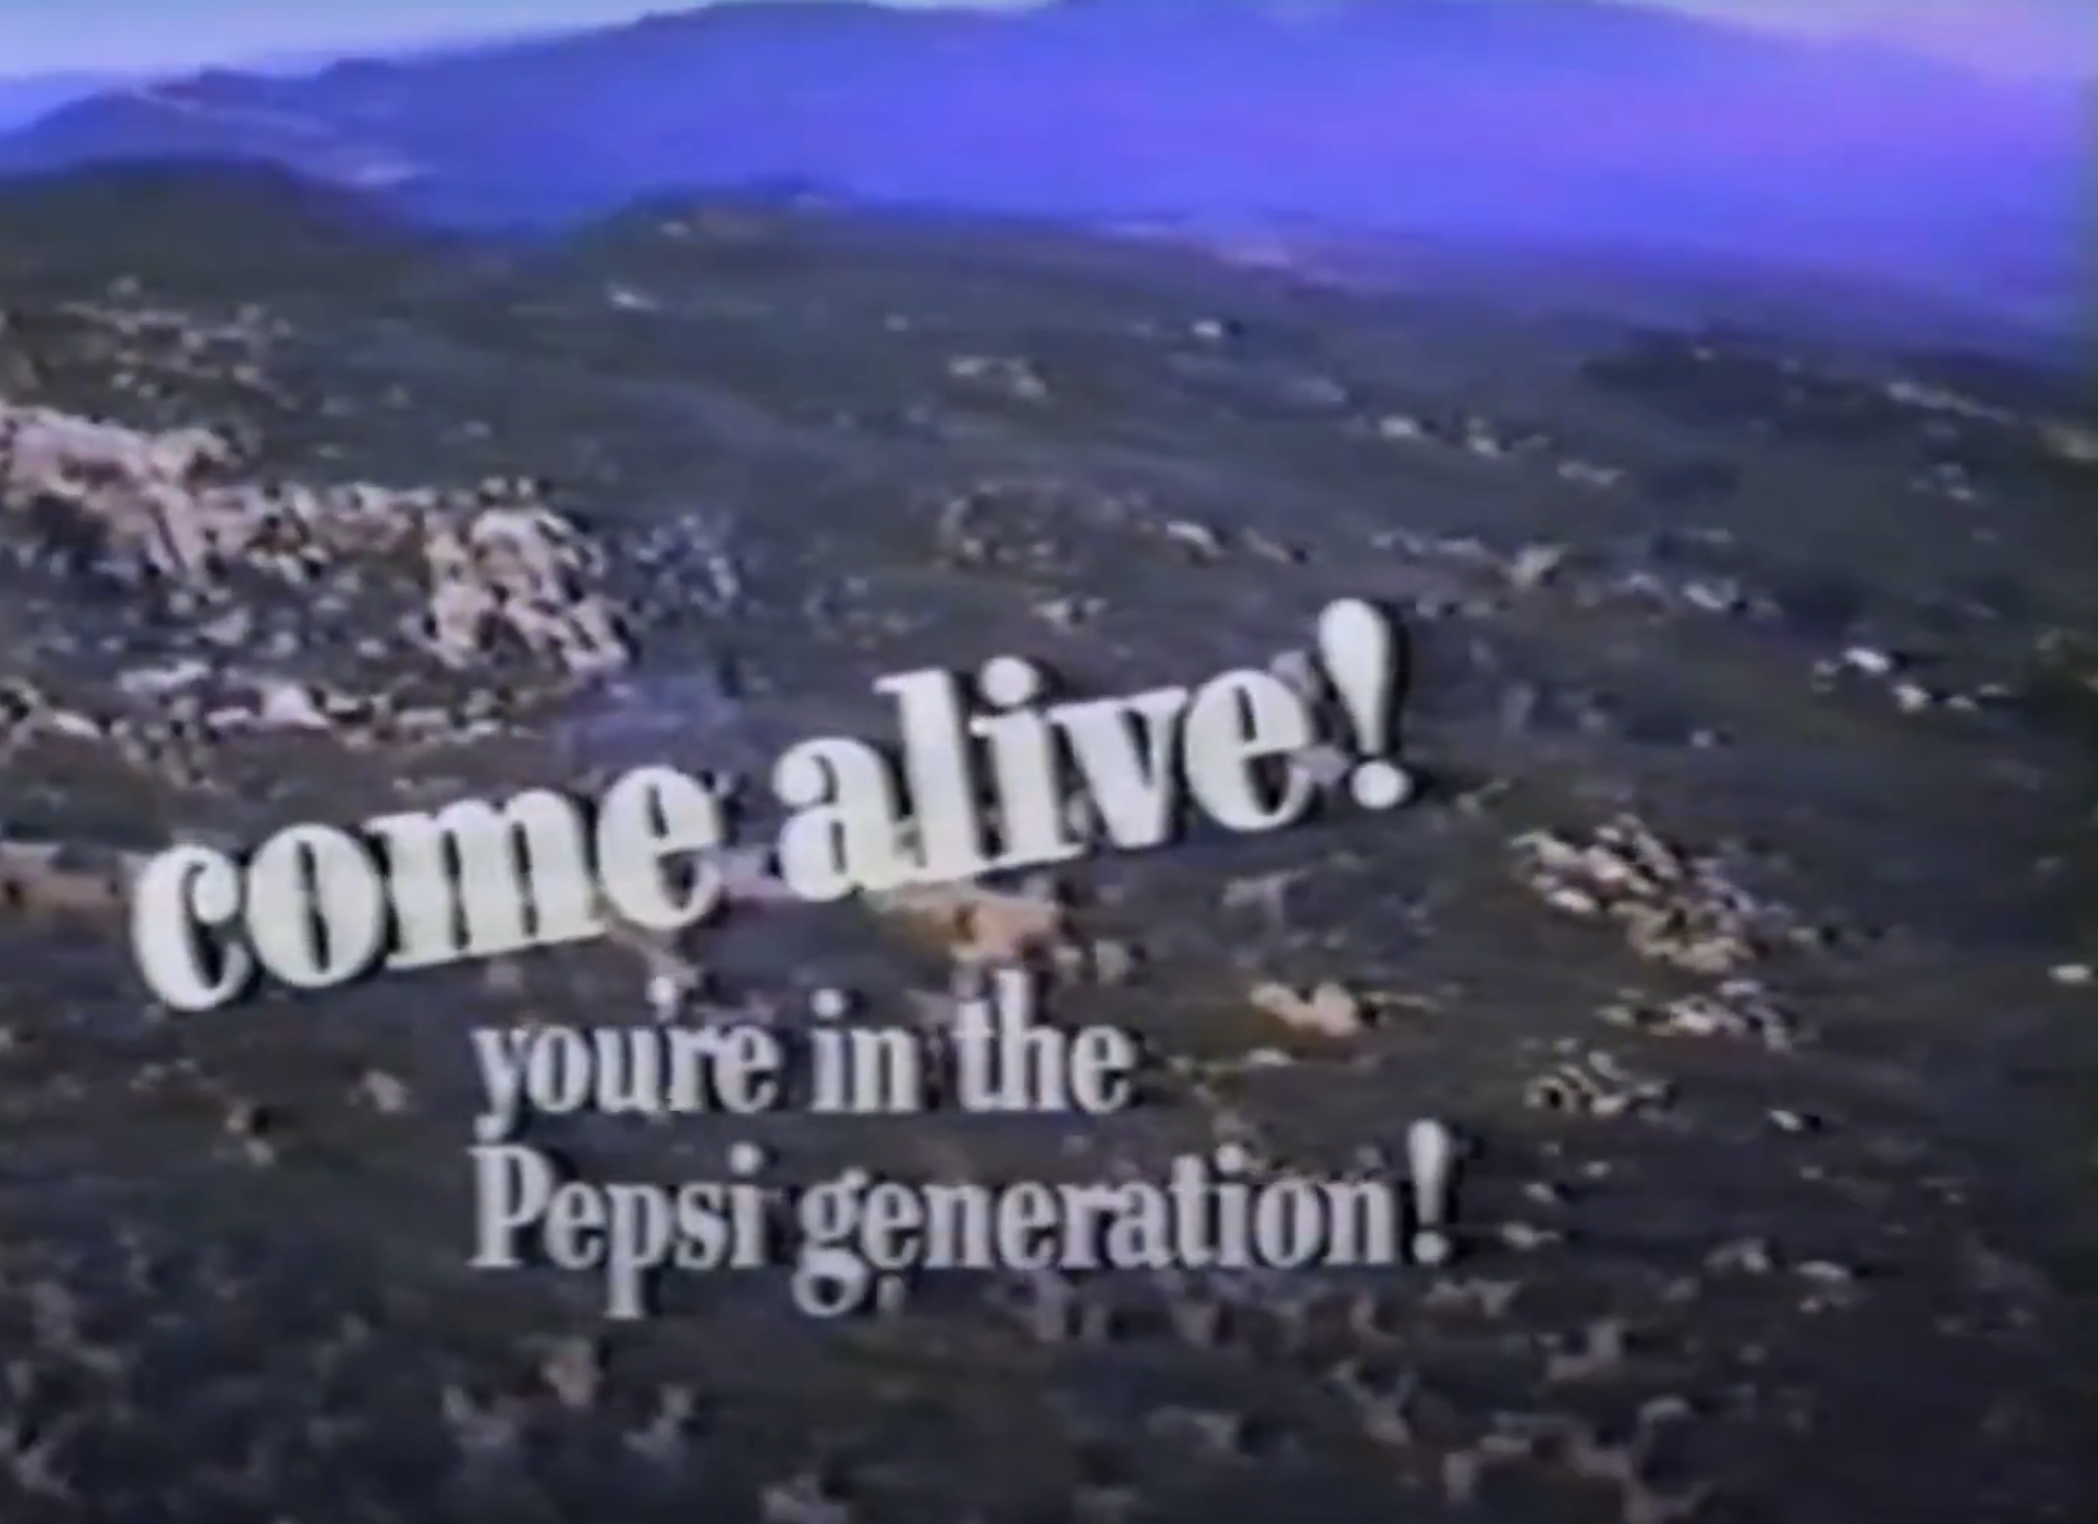 "Come alive! You're the Pepsi generation!"